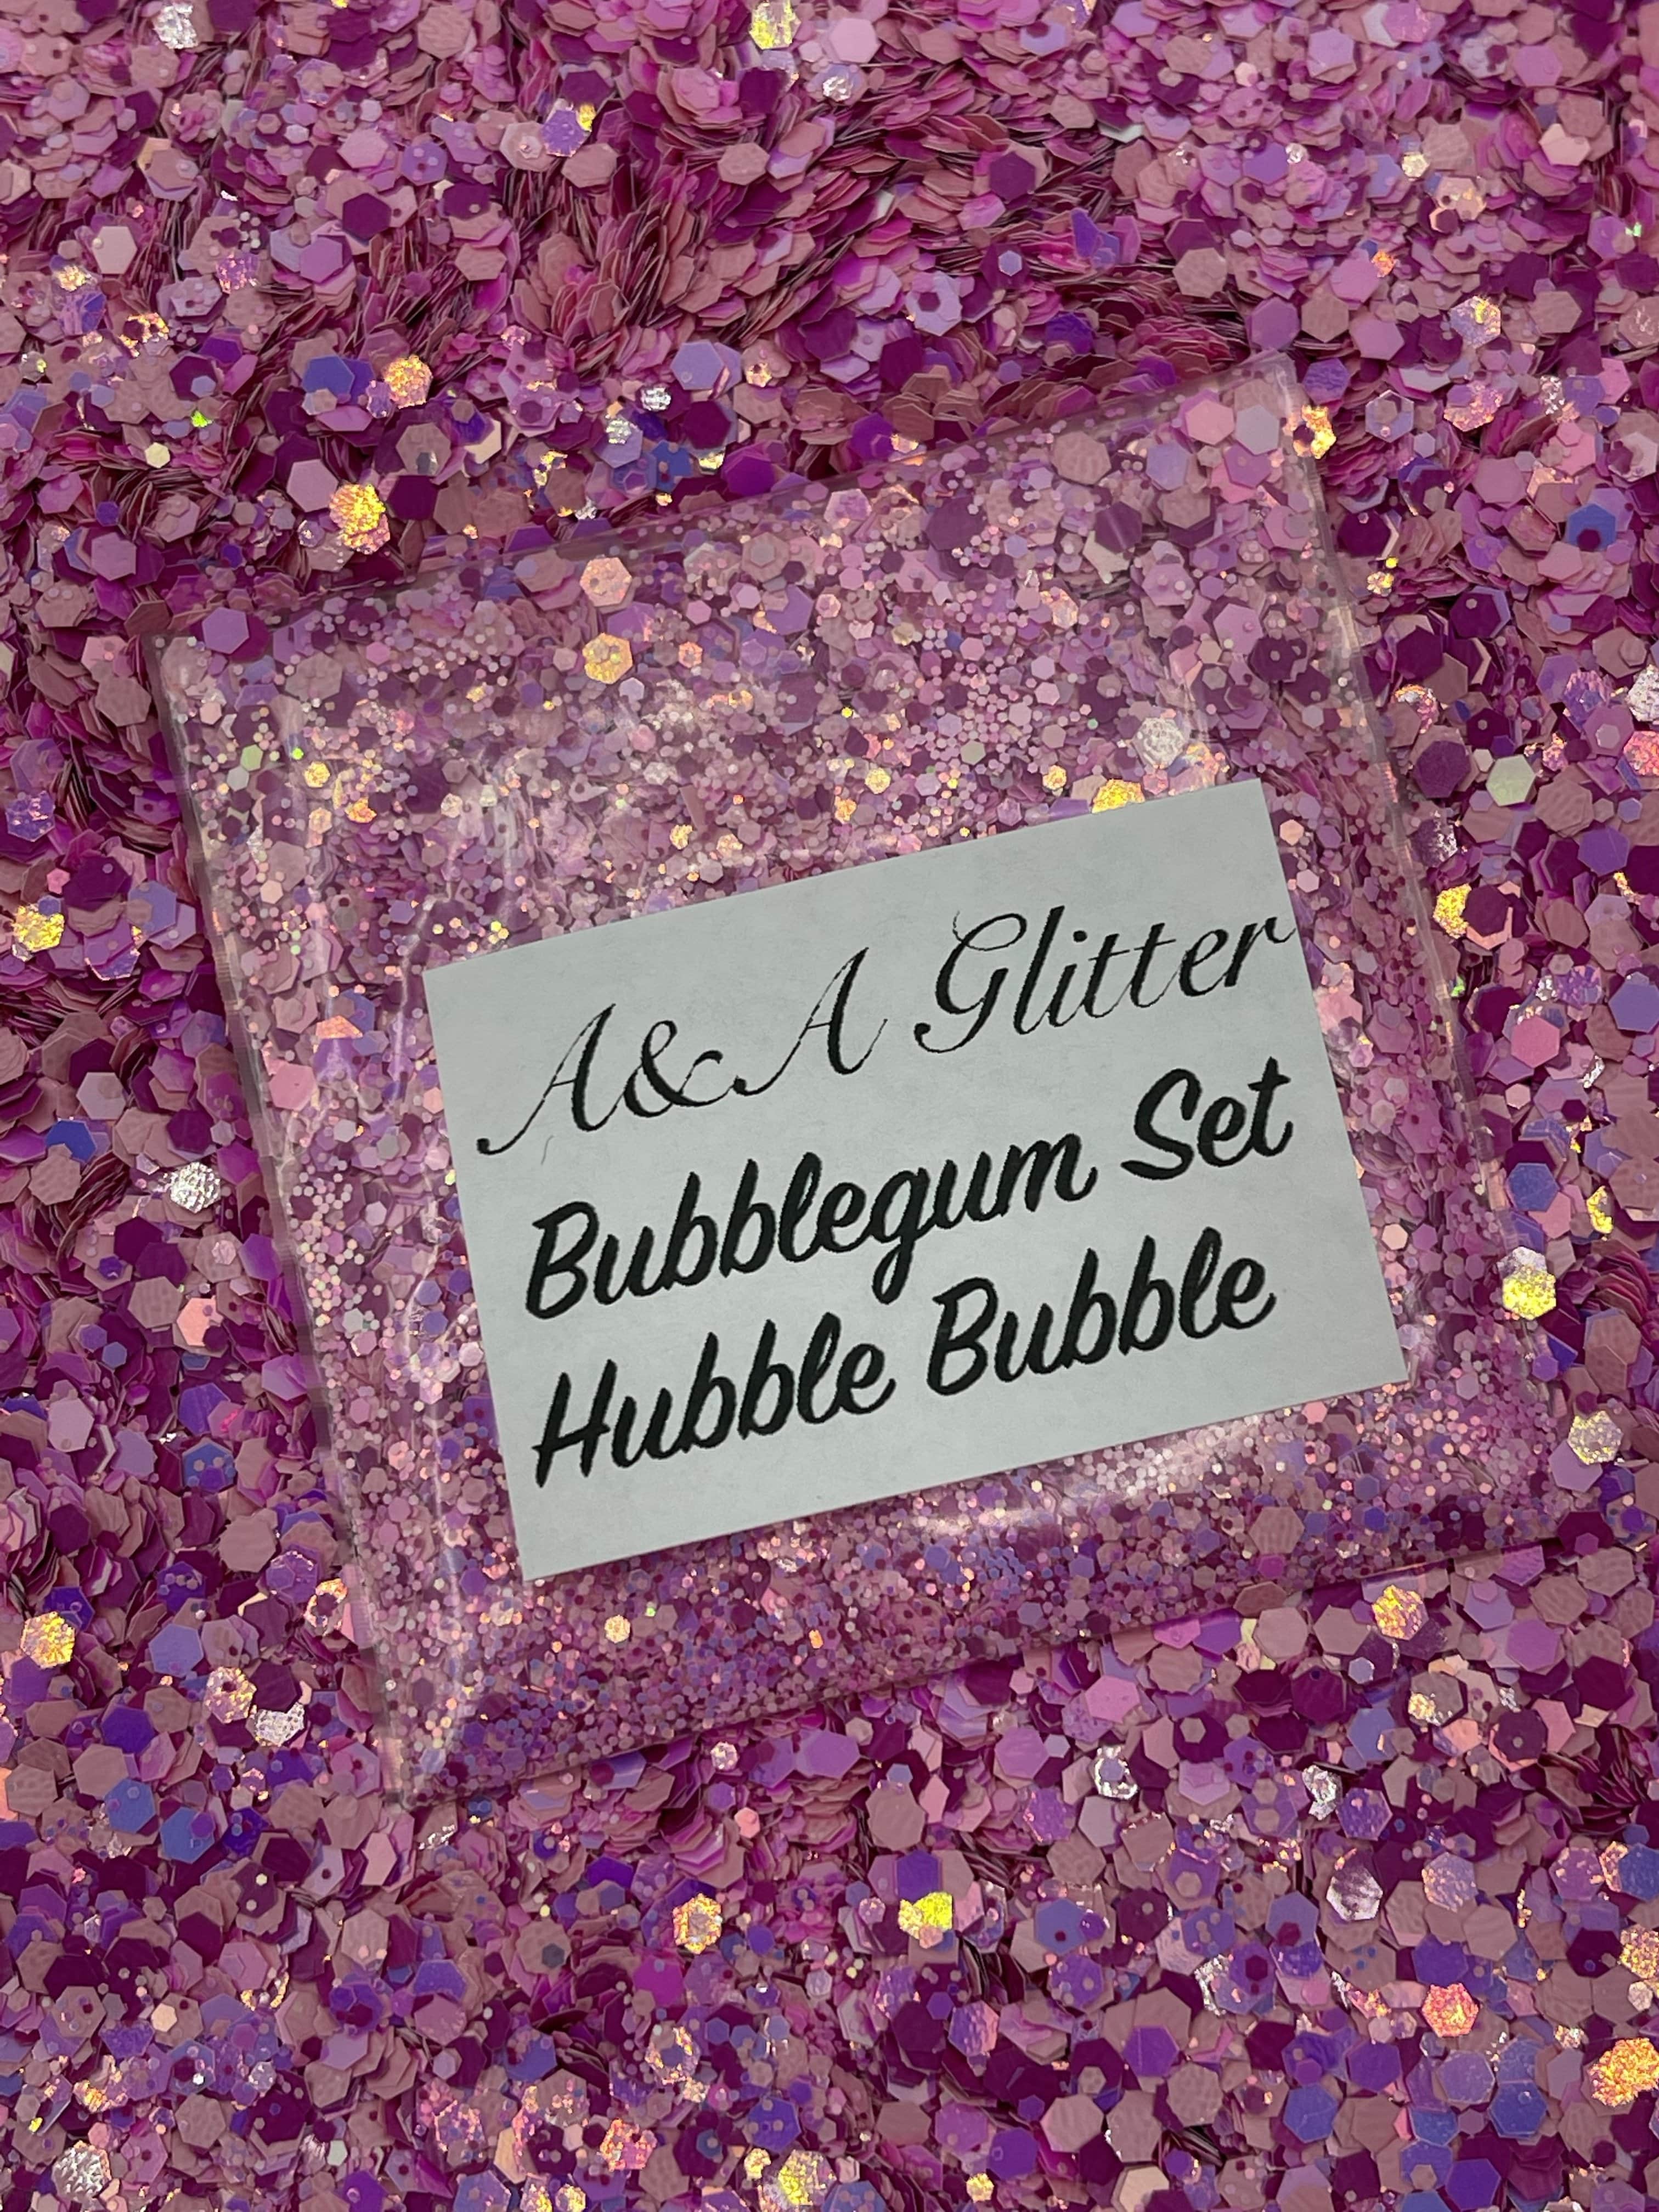 Bubblegum Set